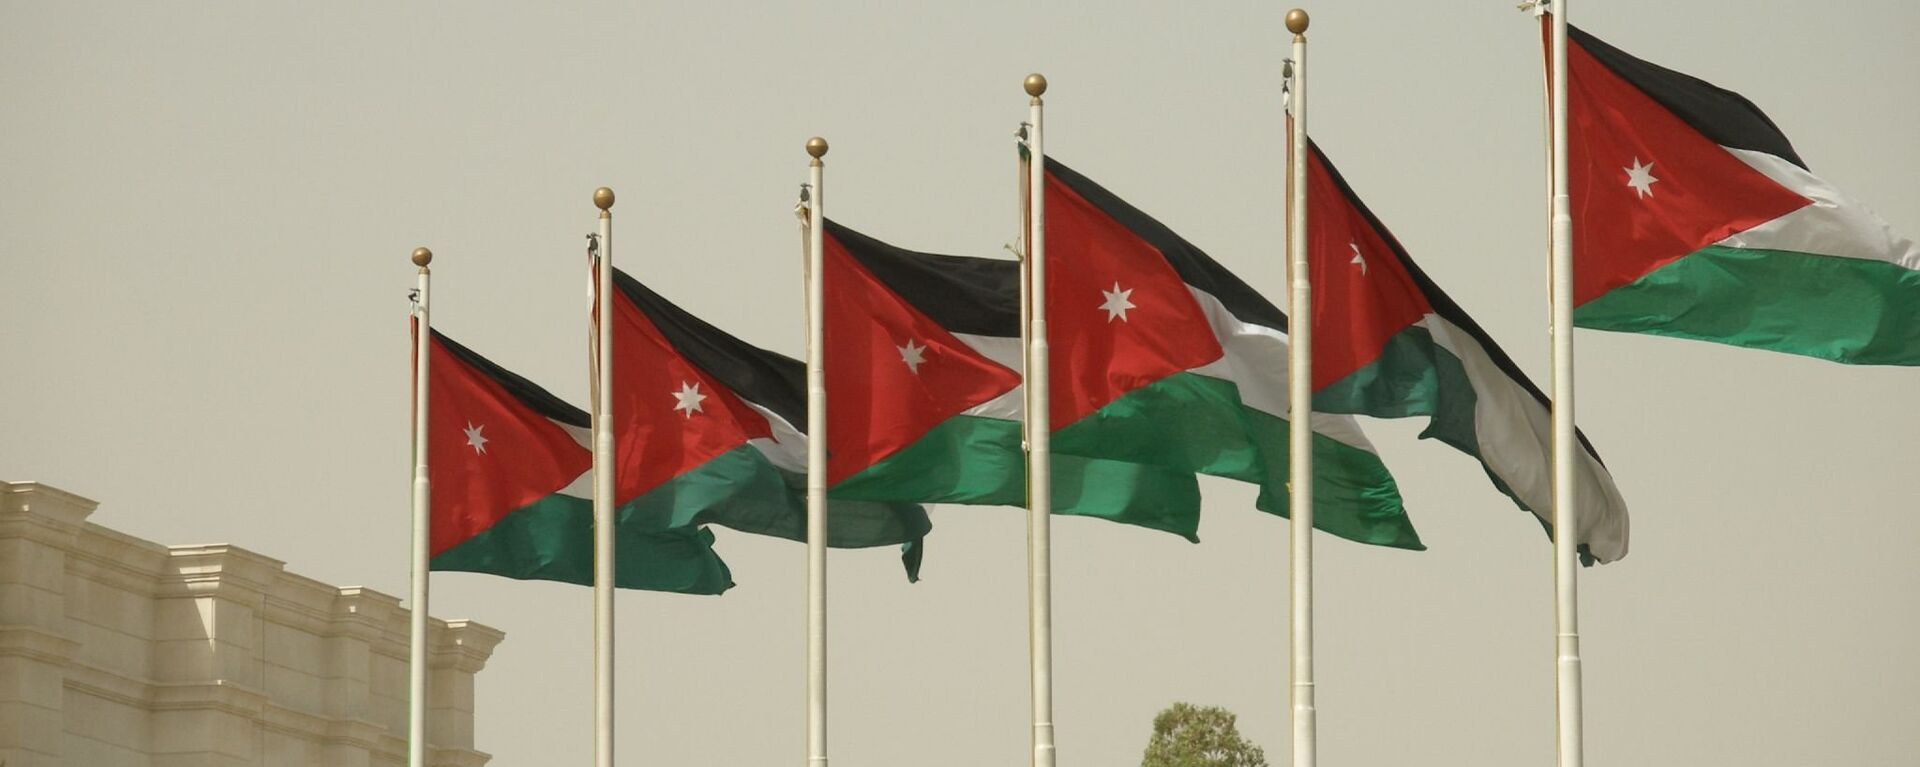 Bandera de Jordania - Sputnik Mundo, 1920, 22.11.2021